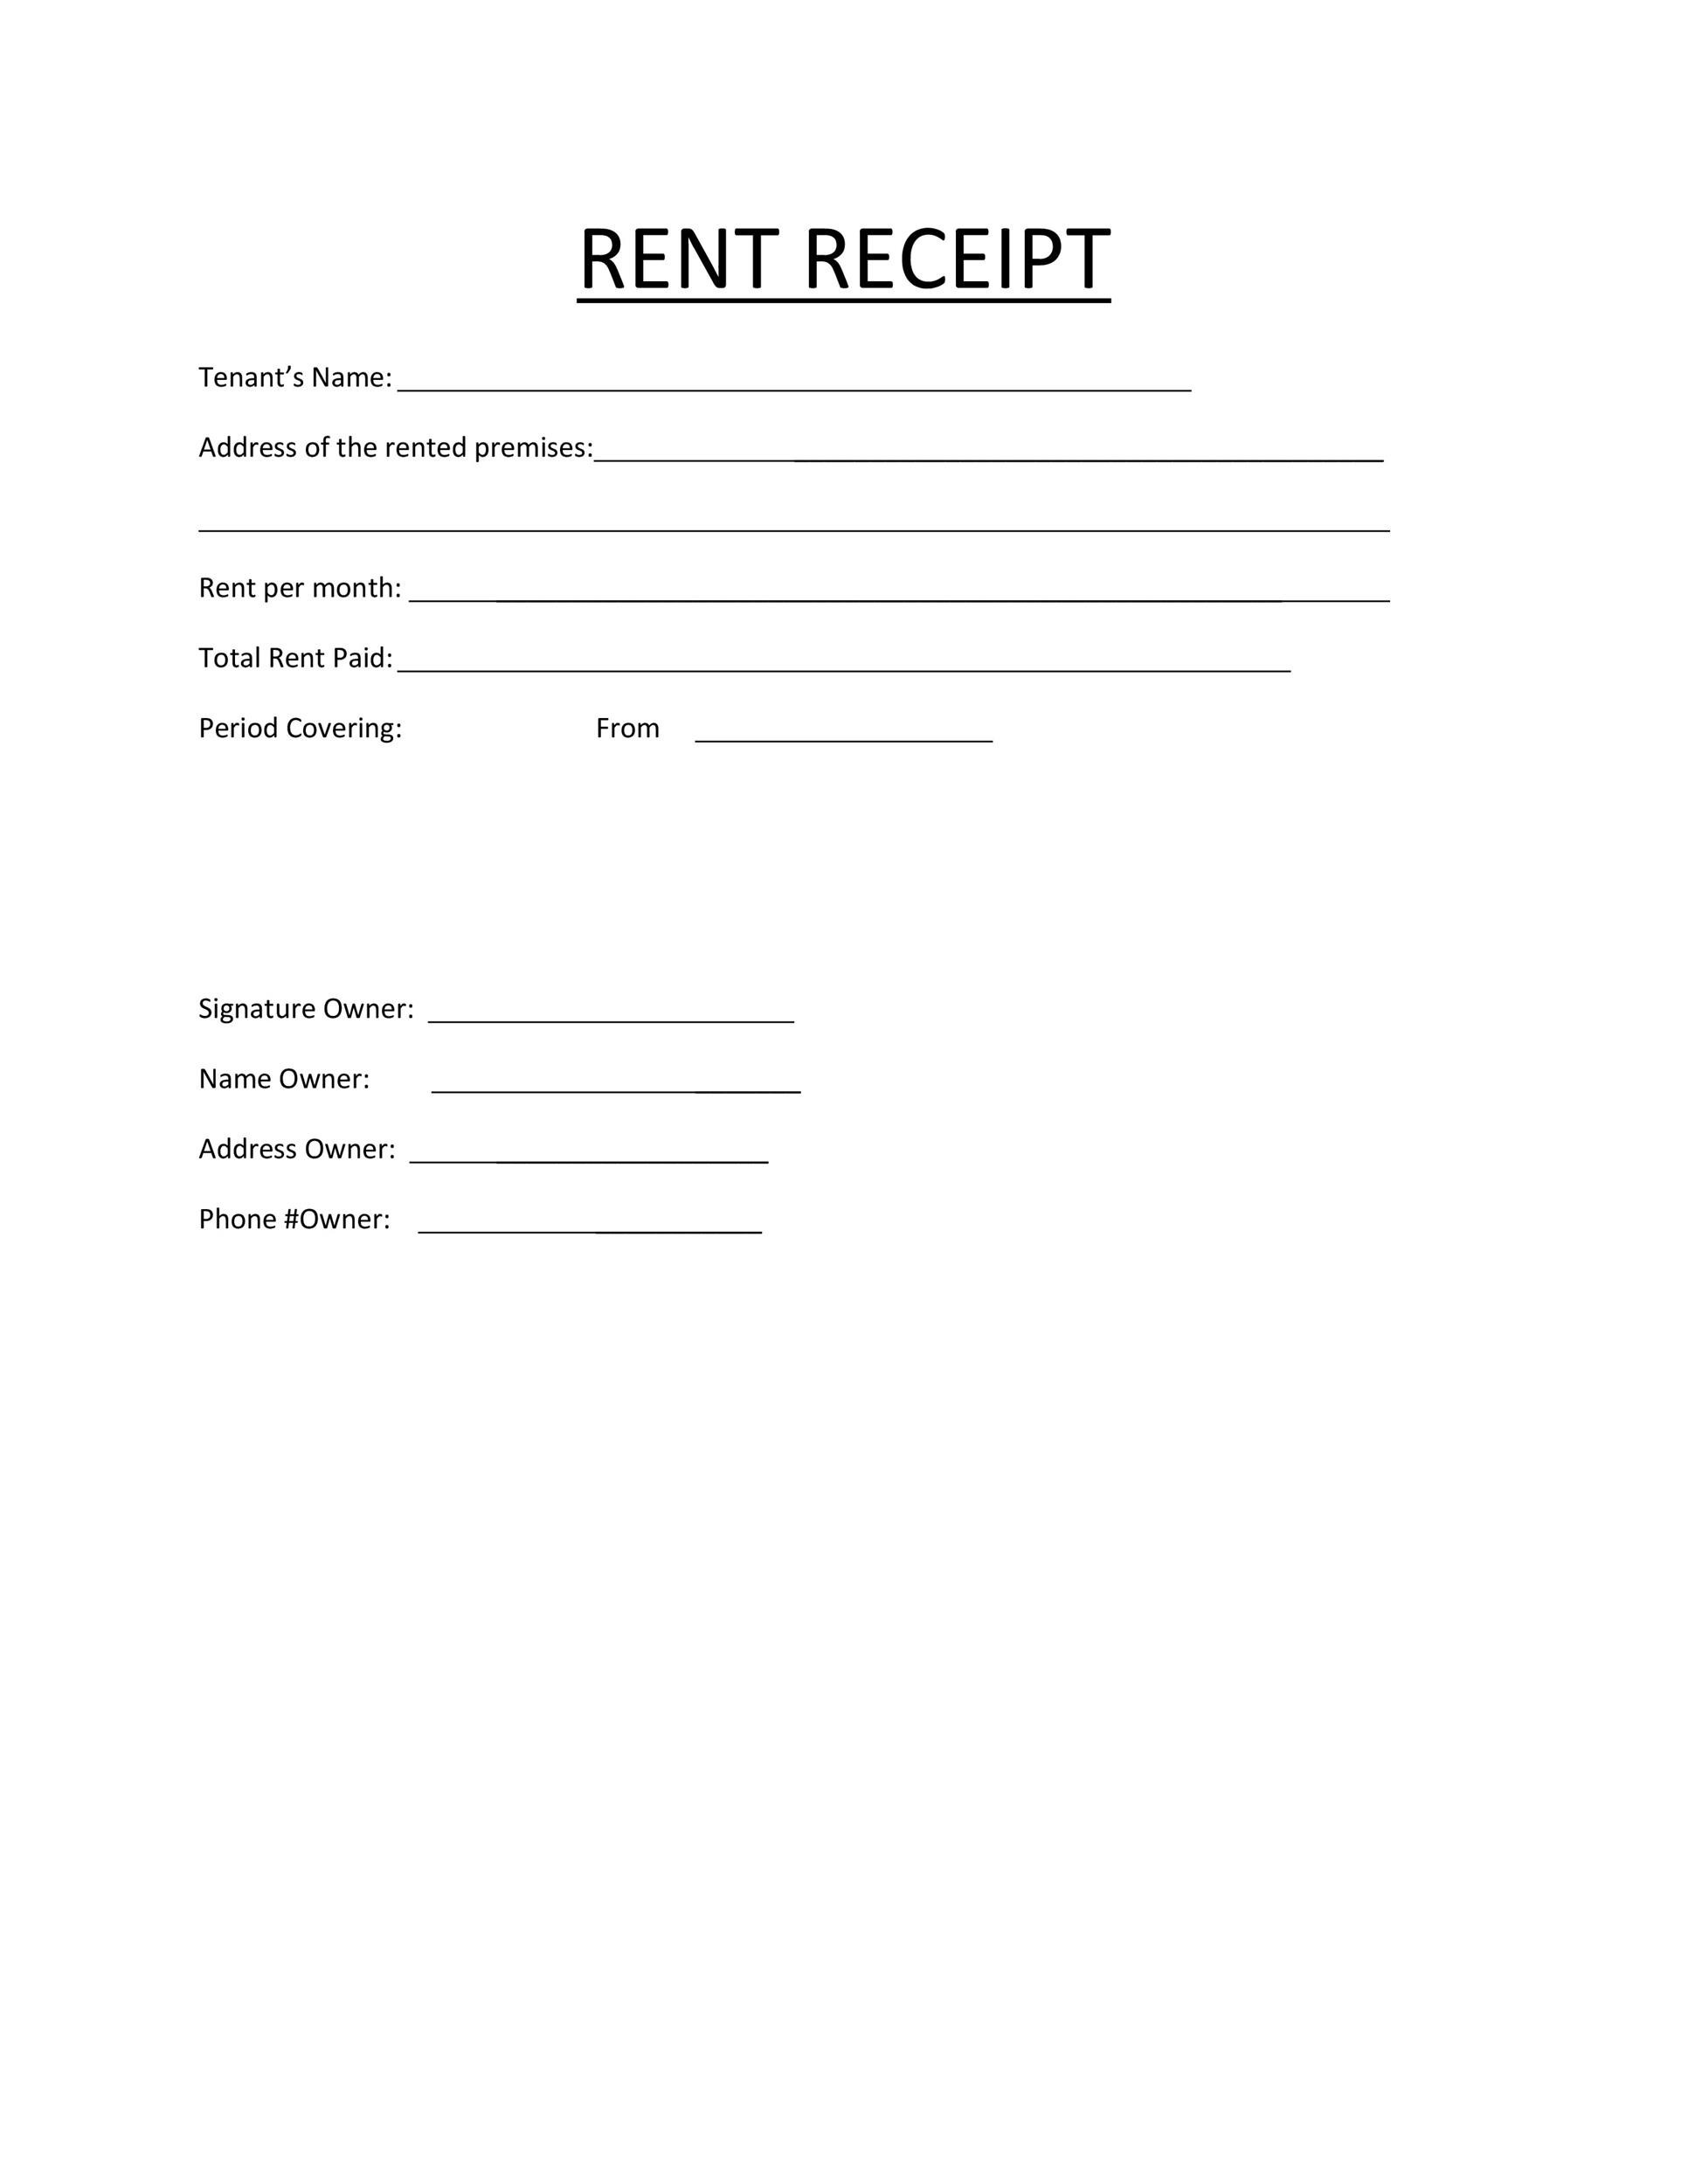 rent-receipt-template-ontario-pdf-stunning-receipt-forms